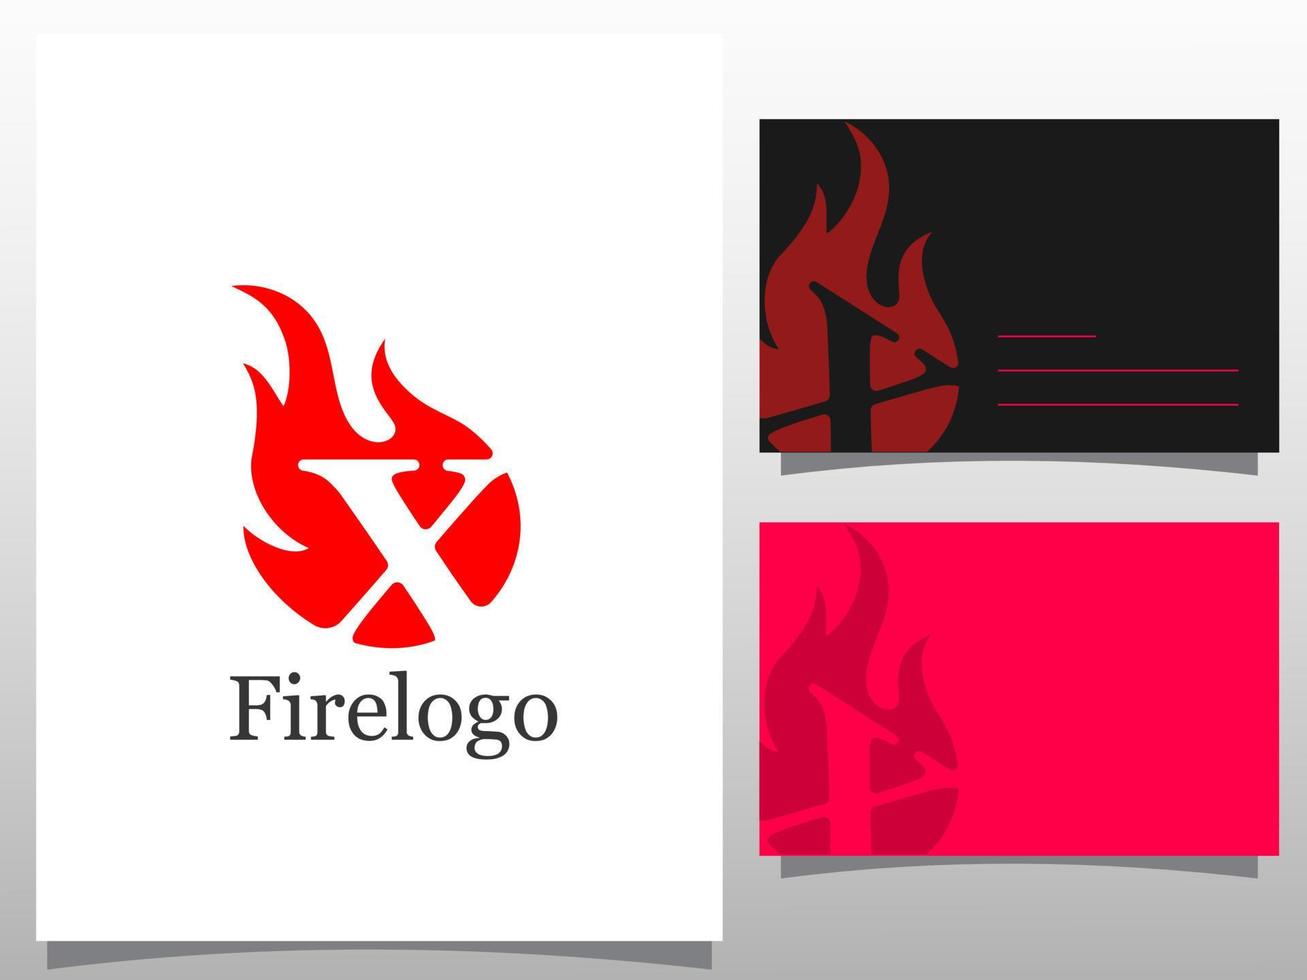 logotype fire . logo design element vector